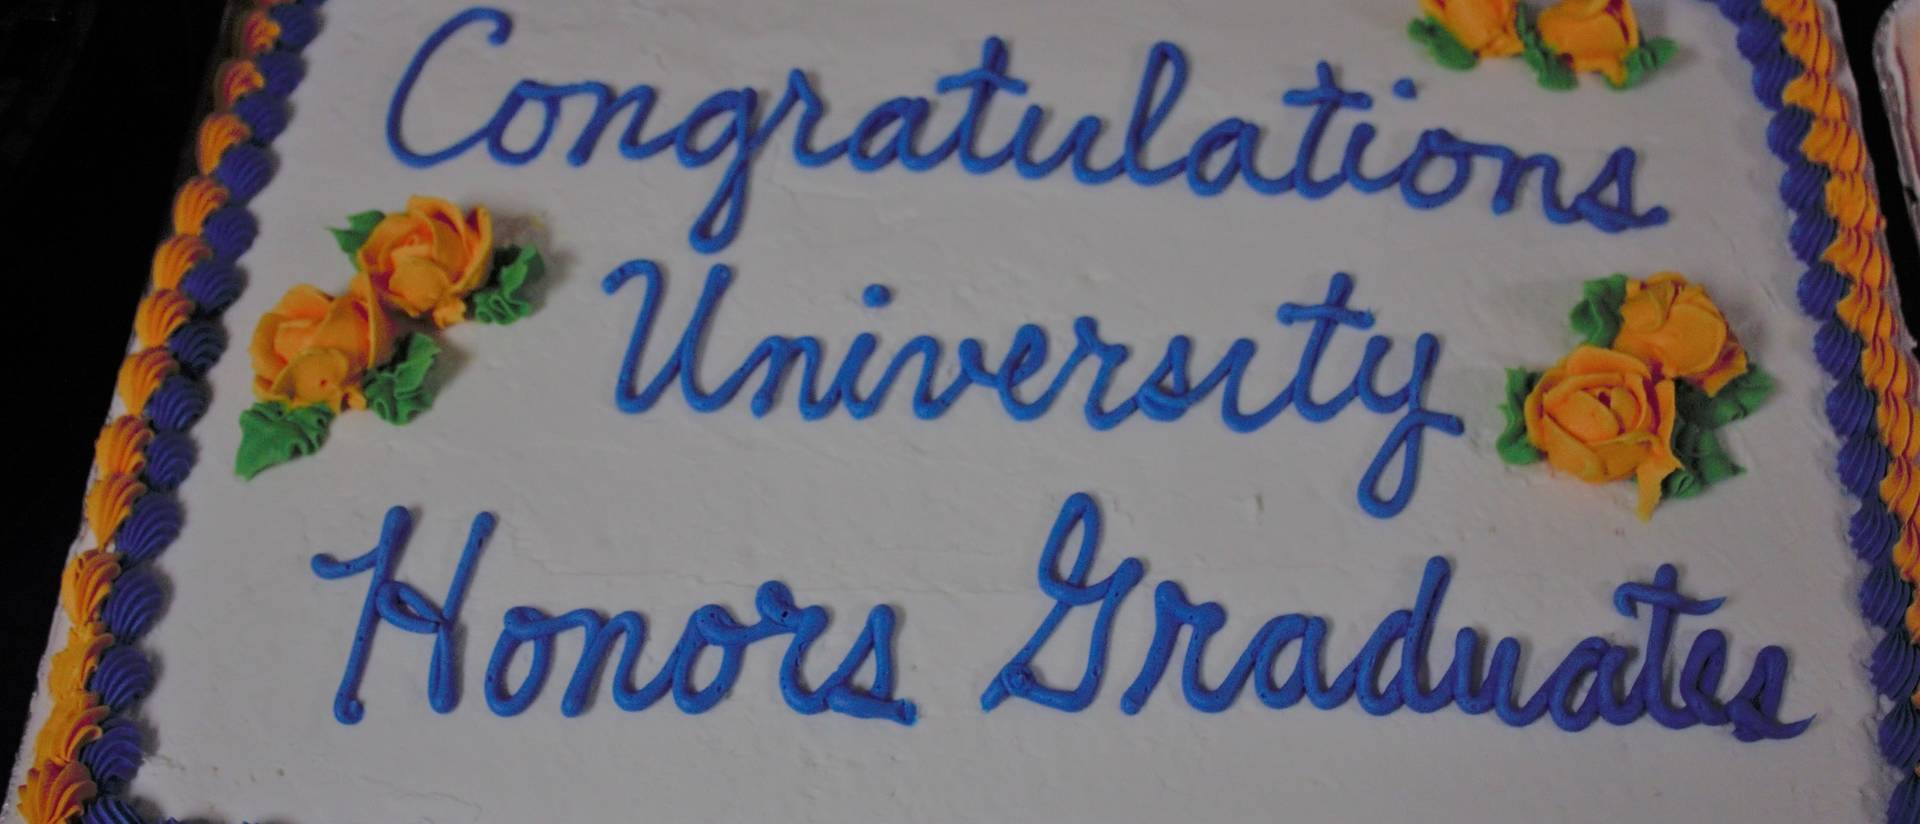 University Honors grad ceremony decorated cake